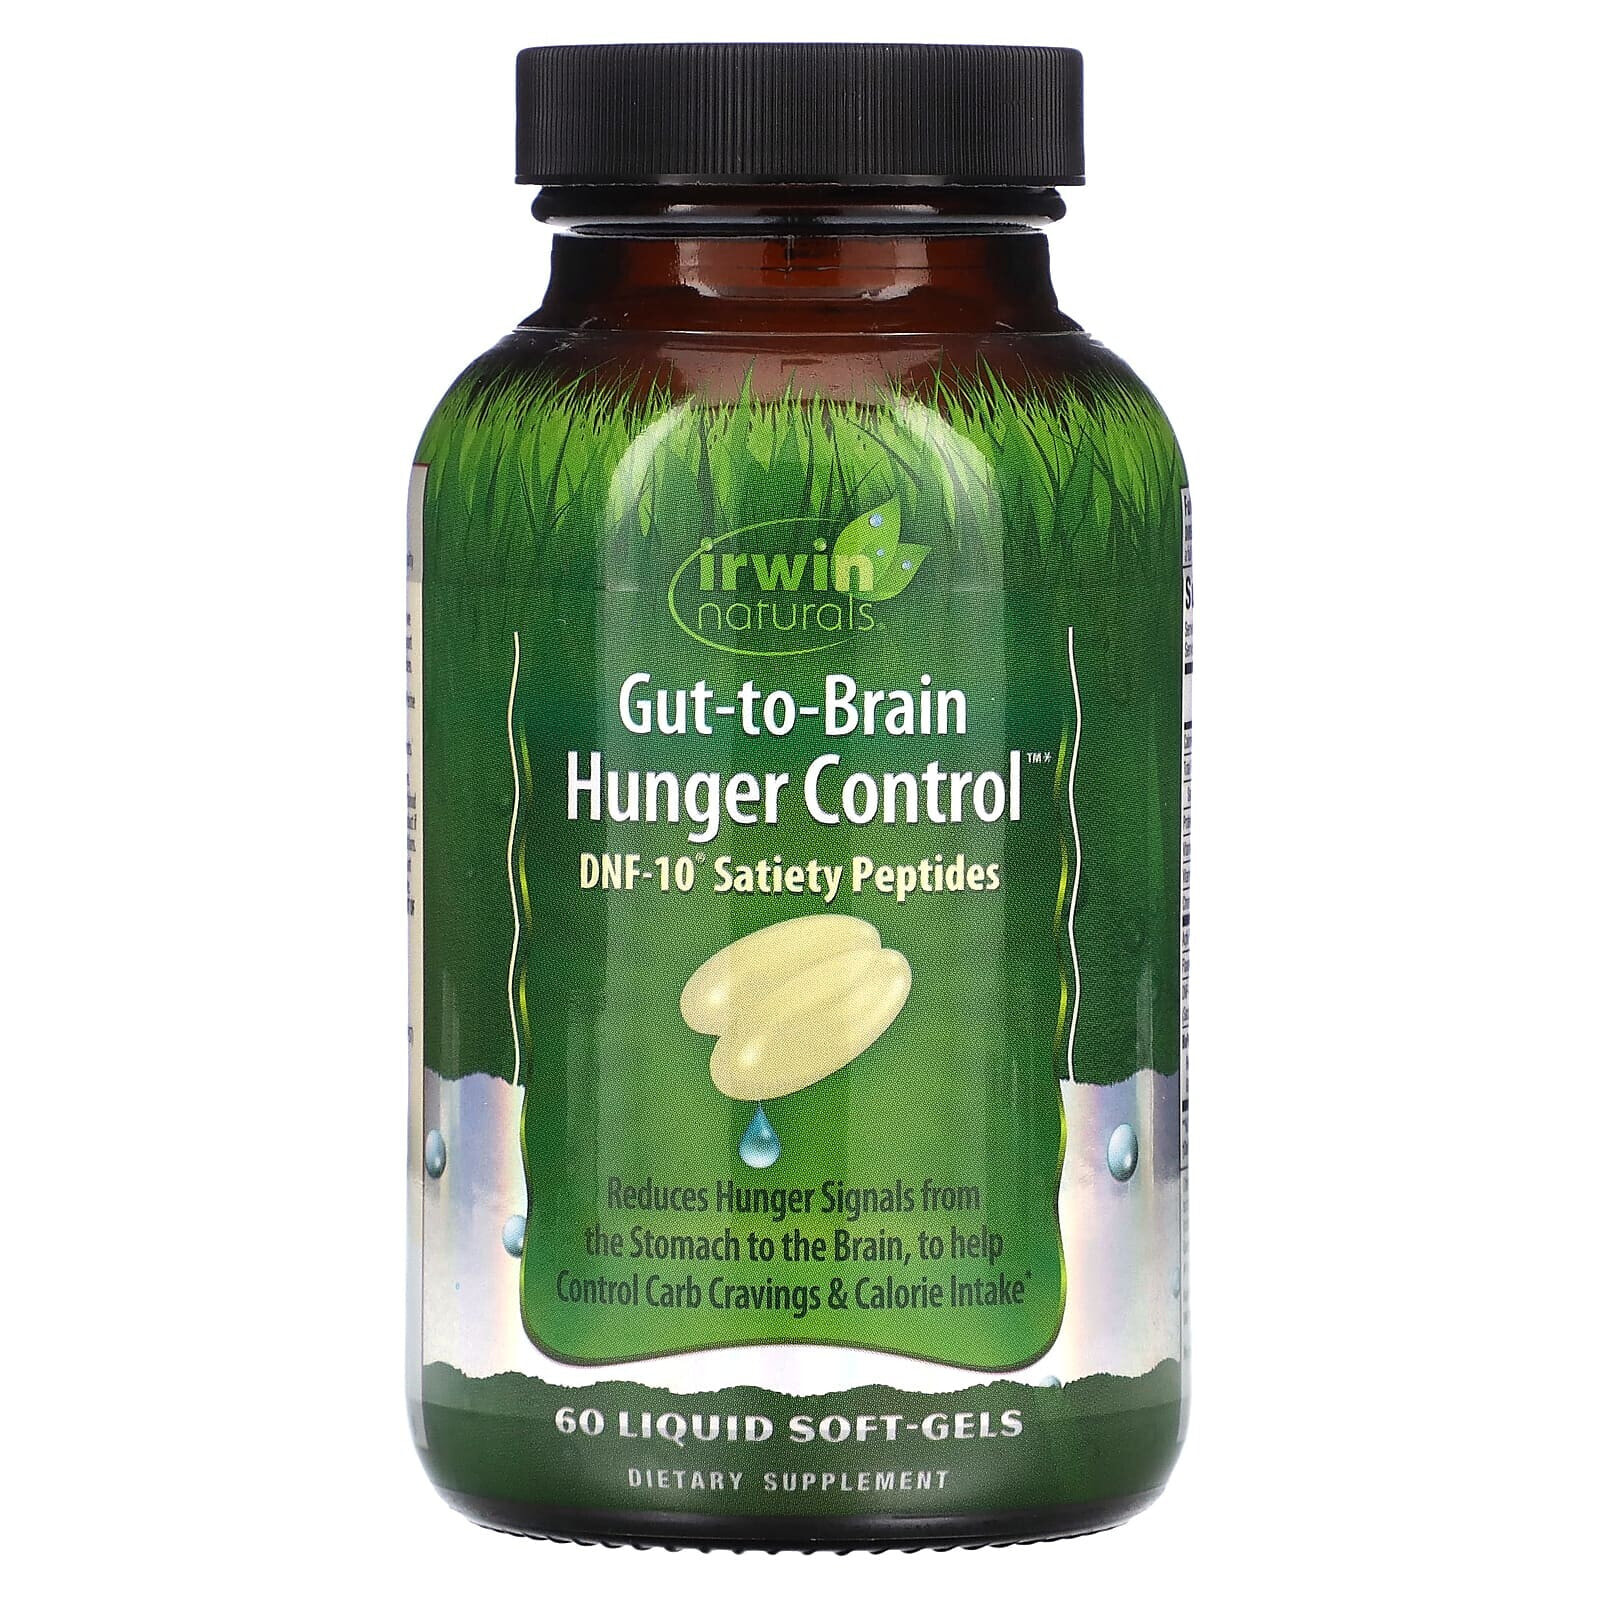 Gut-To-Brain Hunger Control, 60 Liquid Soft-Gels